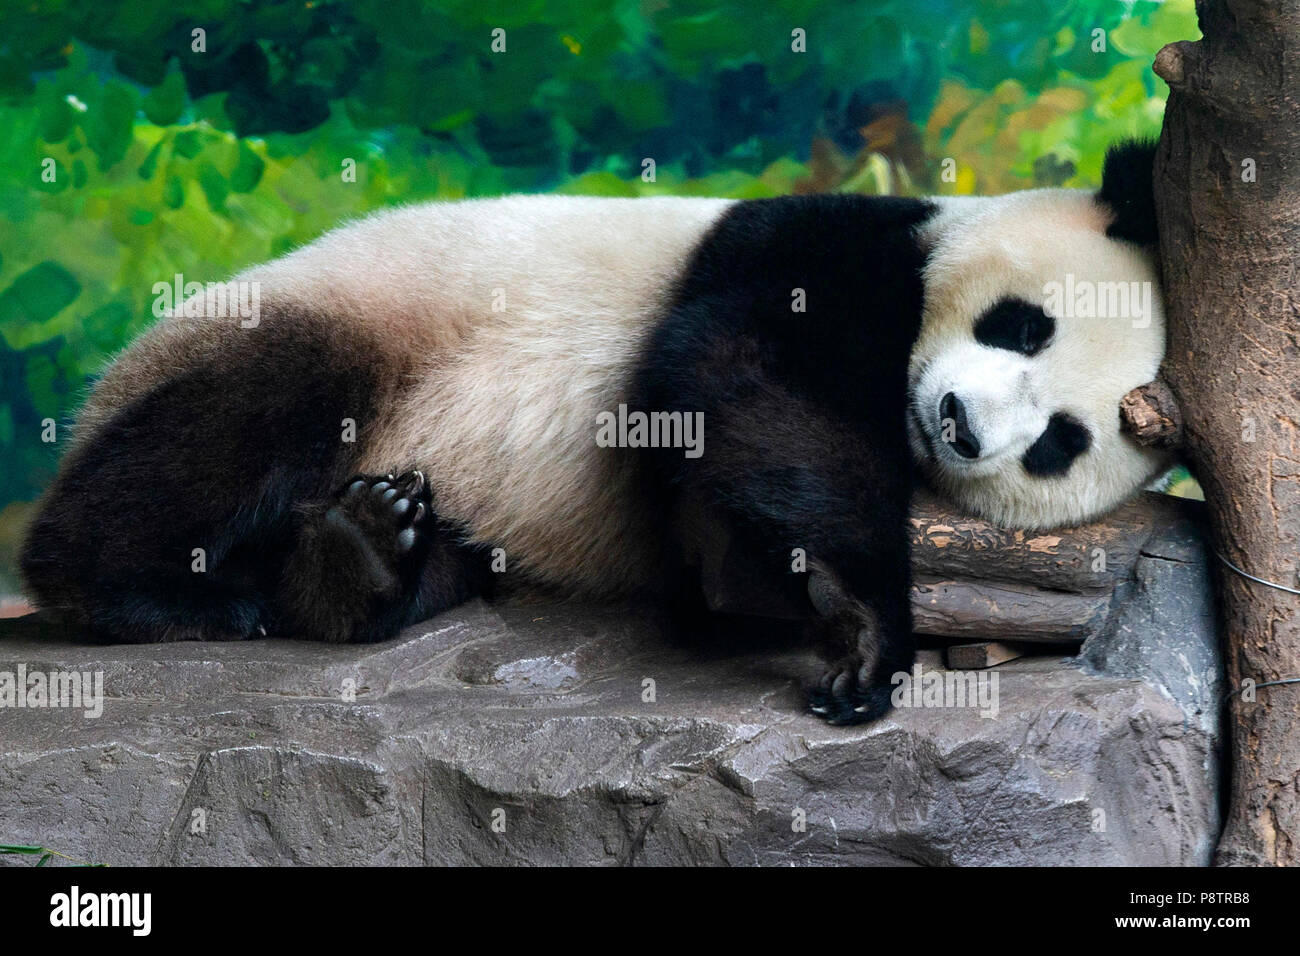 Panda Room Immagini E Fotos Stock Alamy